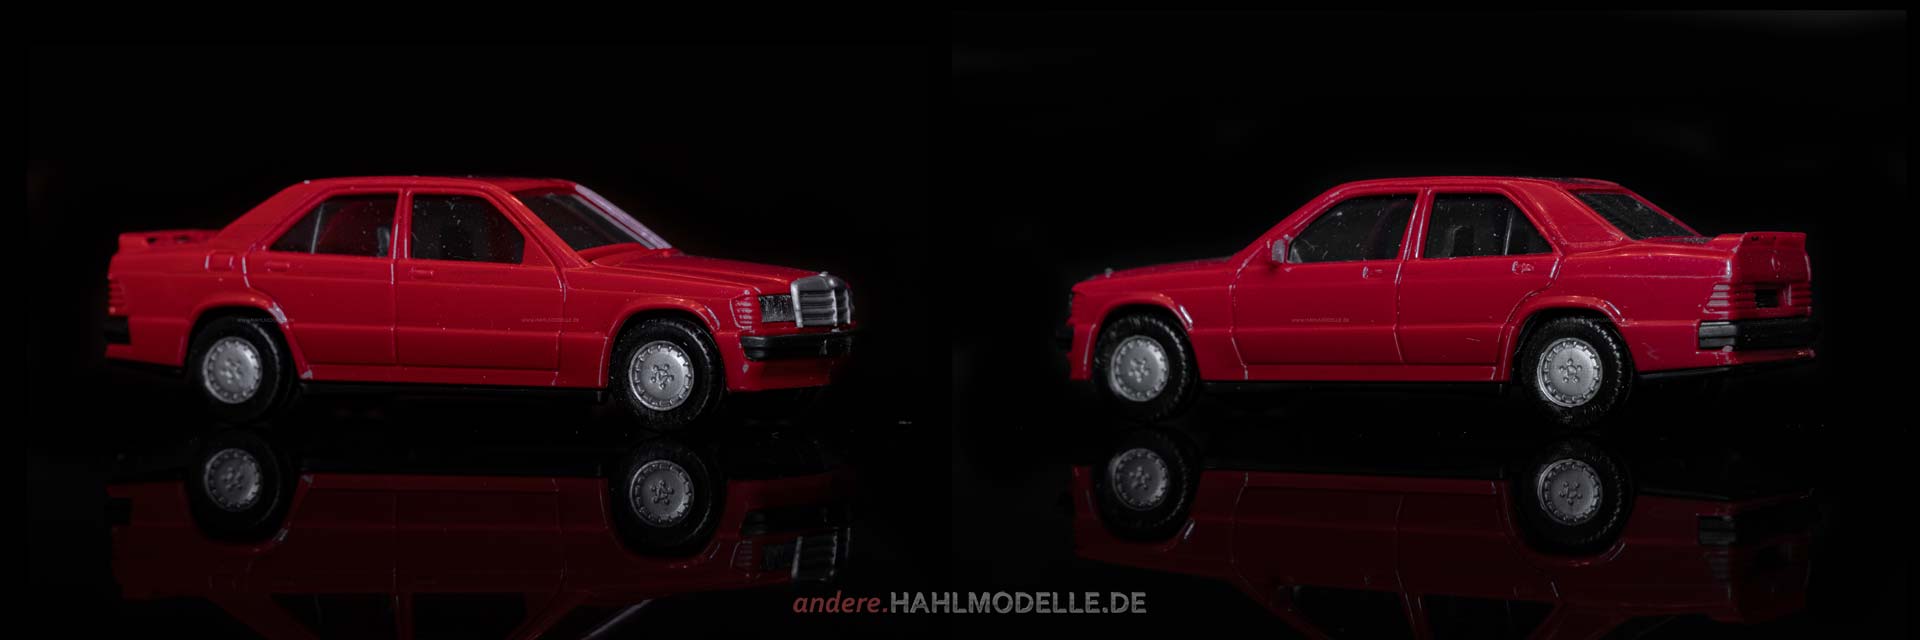 Mercedes-Benz 190E (W201) 2.3-16 | Limousine | Herpa | 1:87 | www.andere.hahlmodelle.de